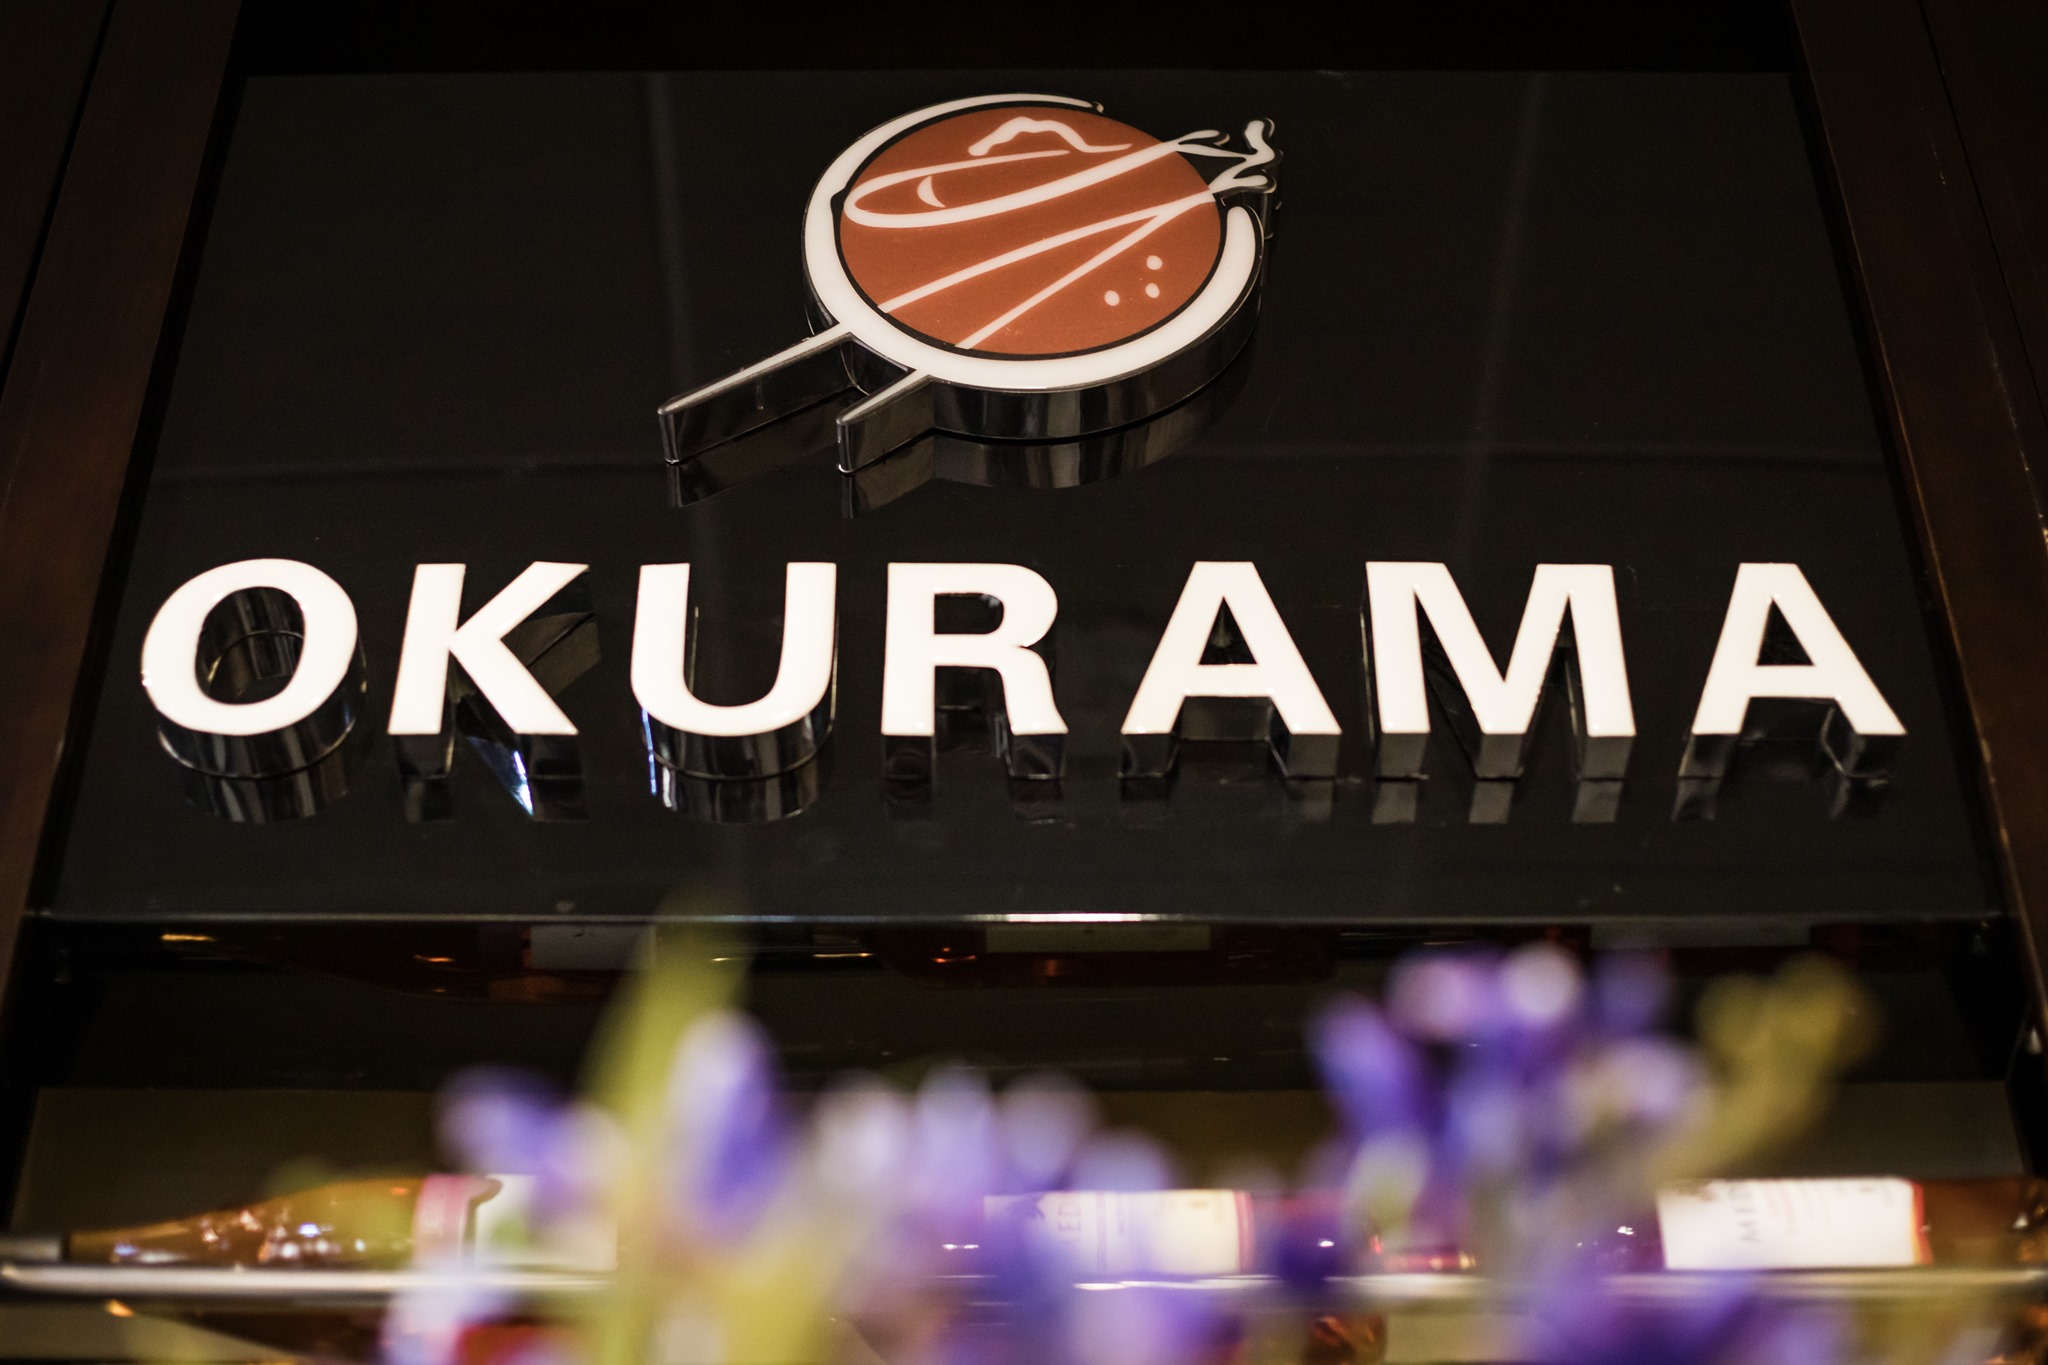 Okurama restaurant signage